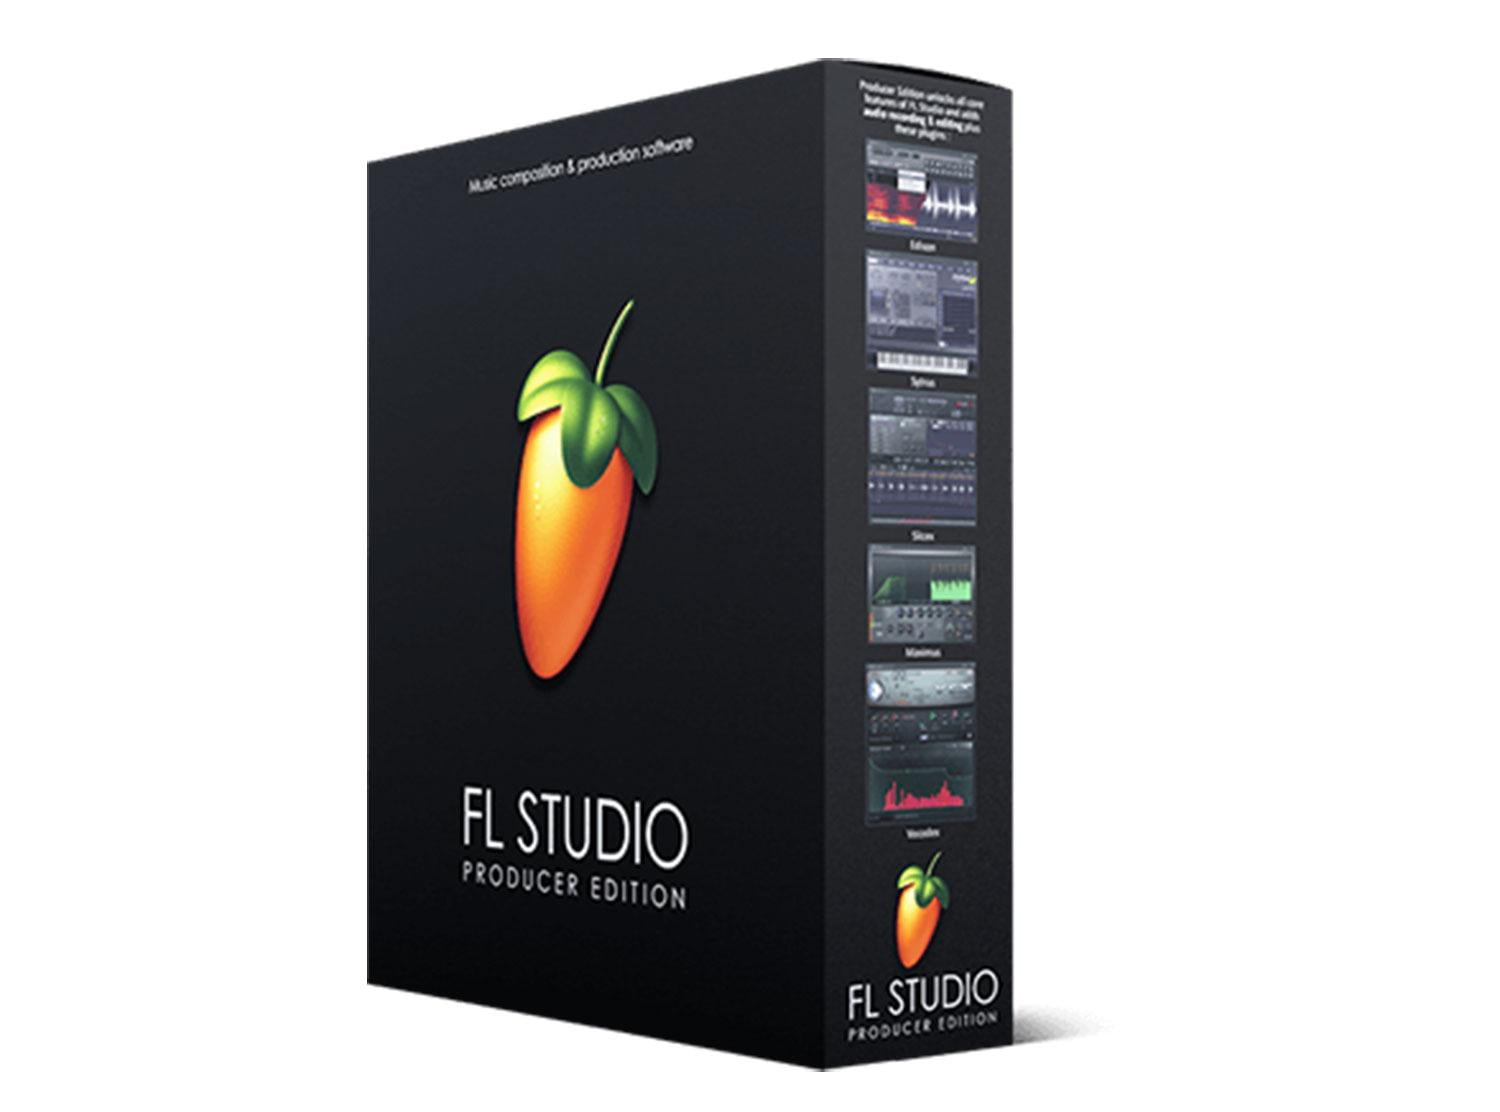 fl studio 12.4 crack only download free